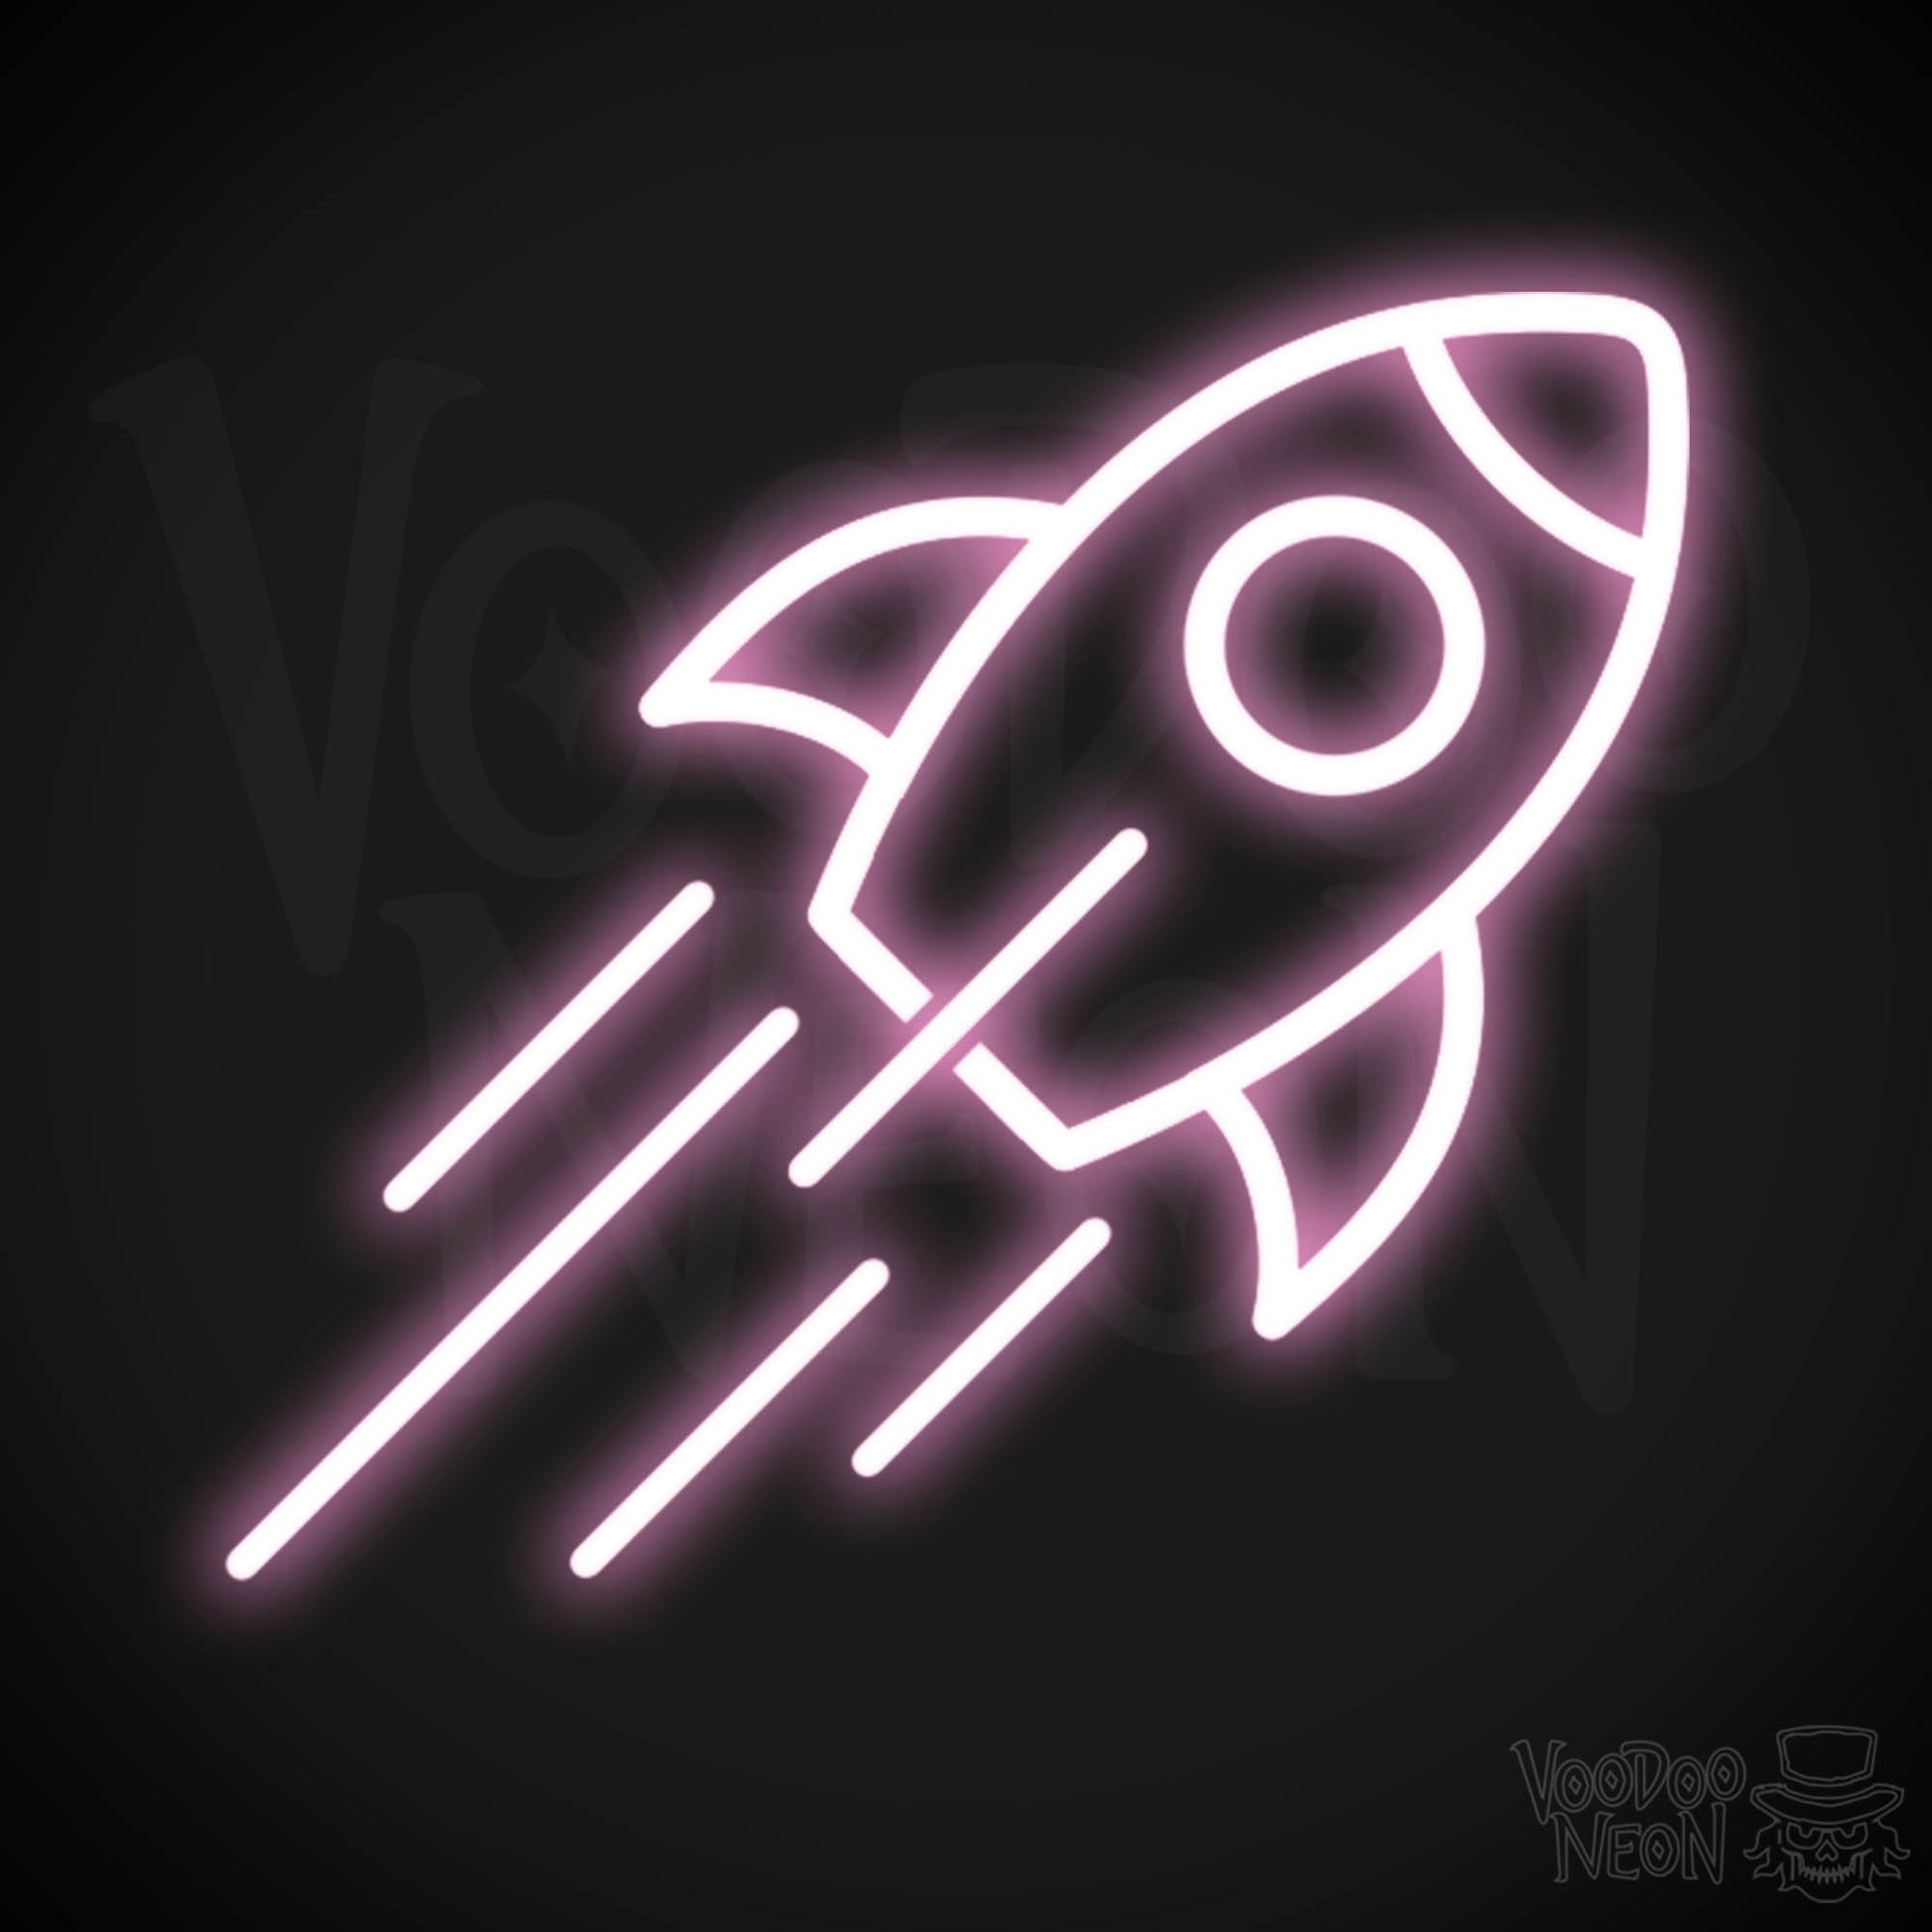 Neon Rocket - Rocket Neon Sign - Rocket Ship Neon Wall Art - Color Light Pink